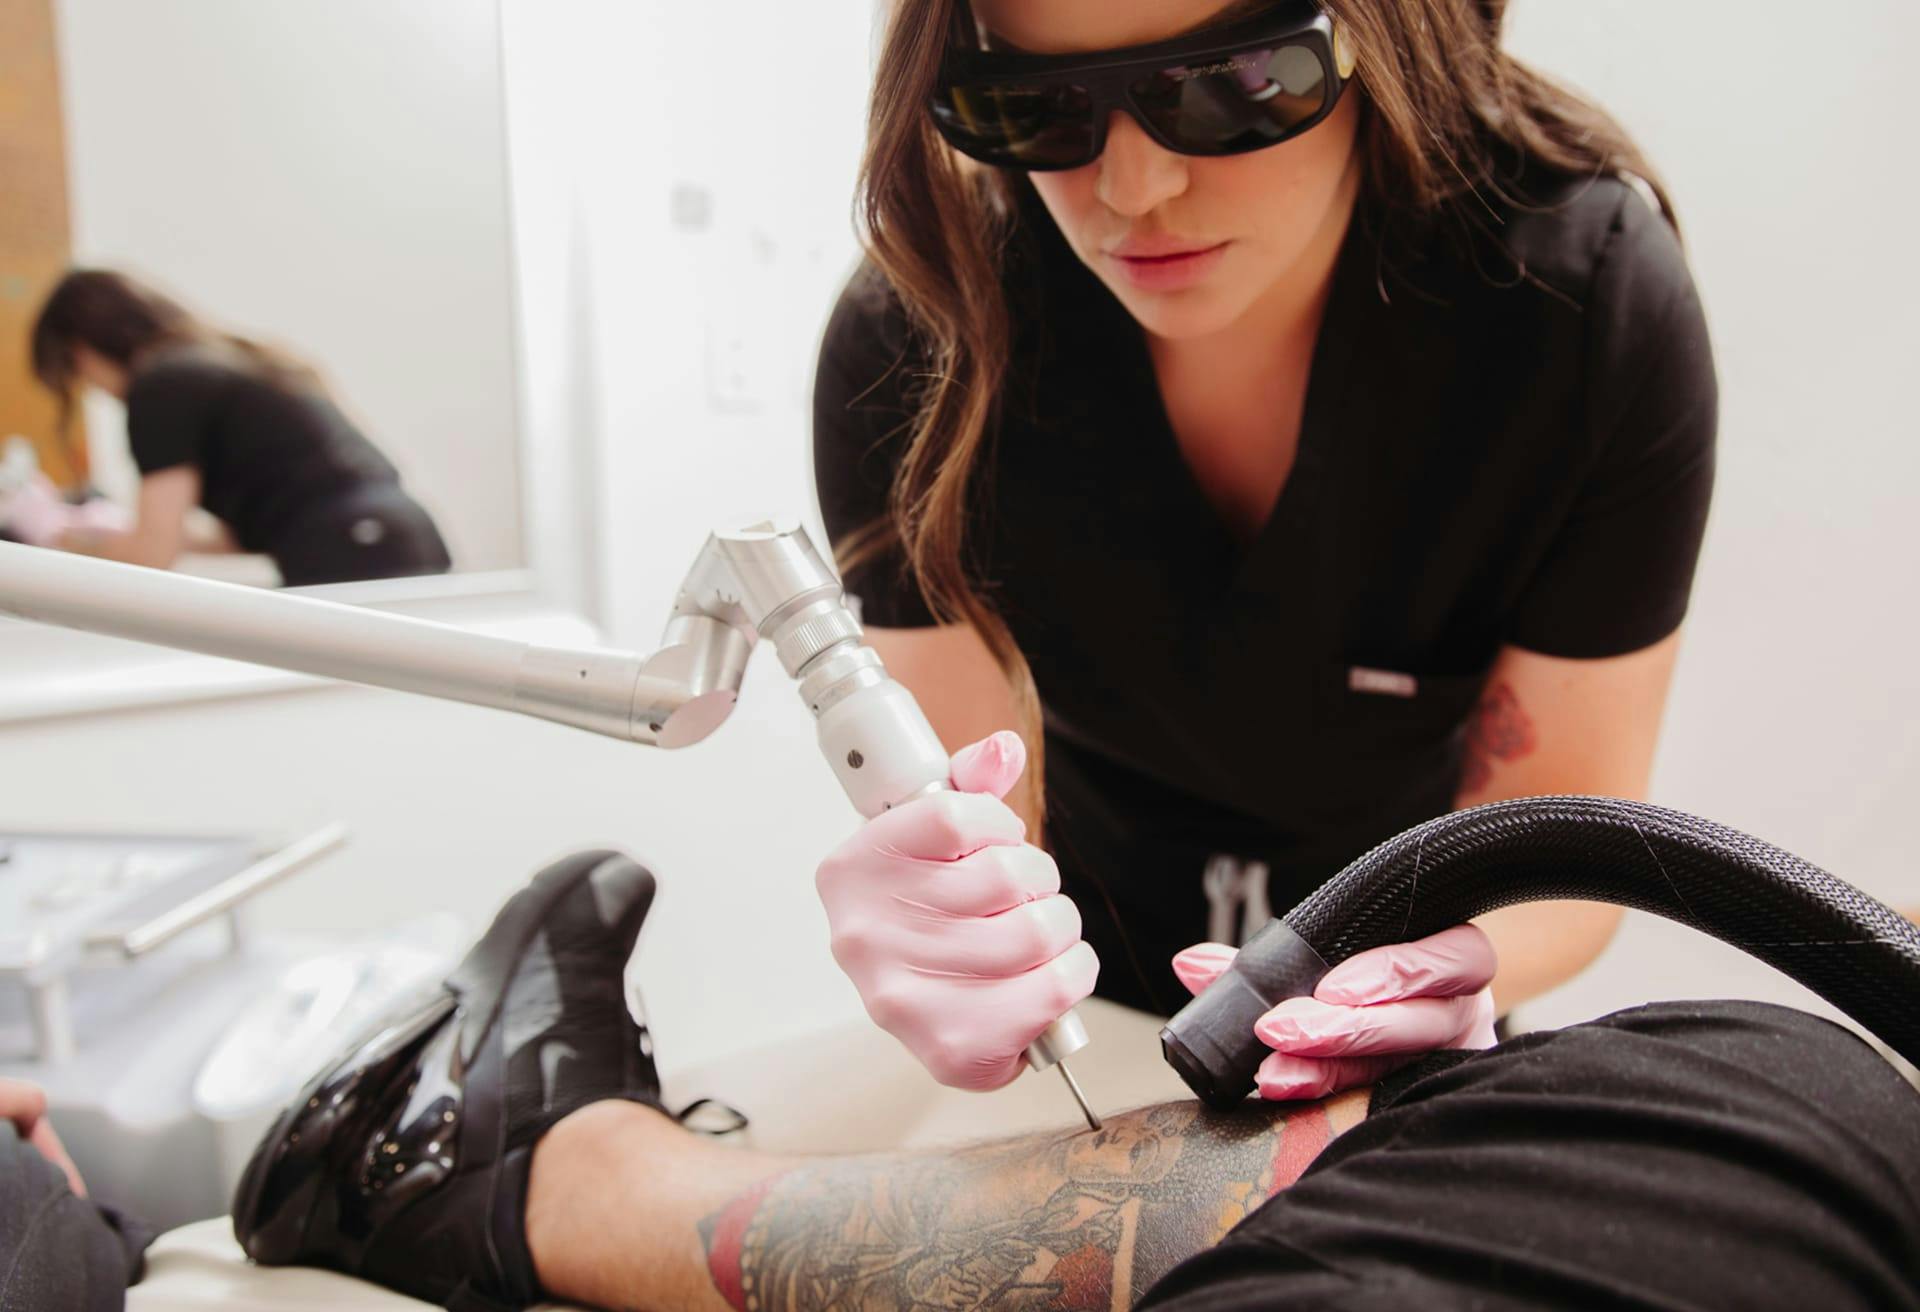 laser tattoo removal procedure